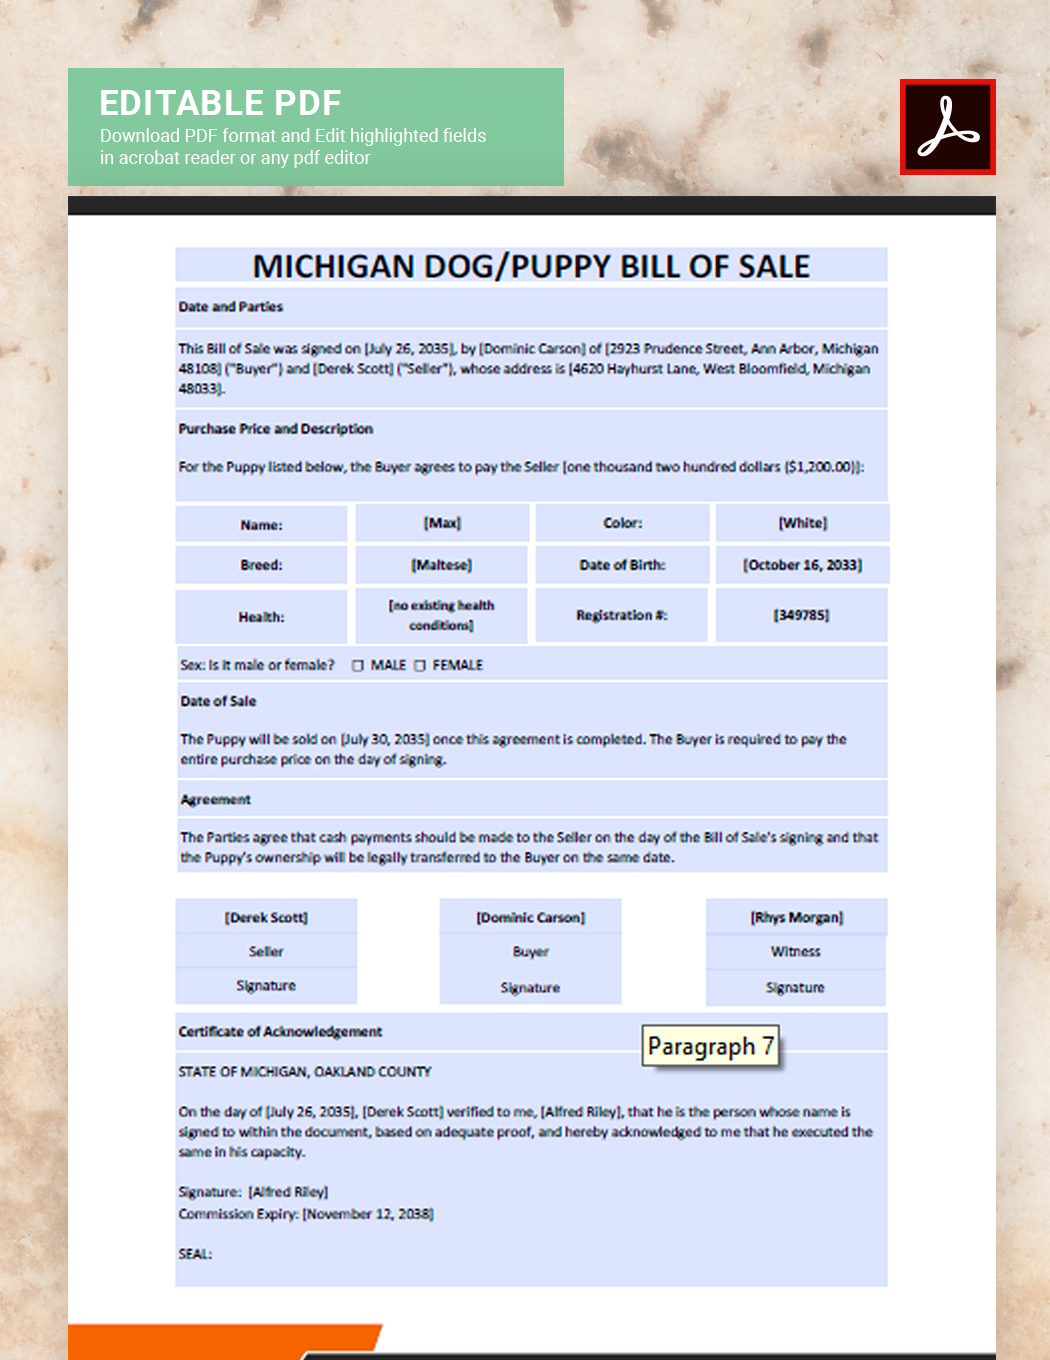      Michigan Dog / Puppy Bill of Sale Template